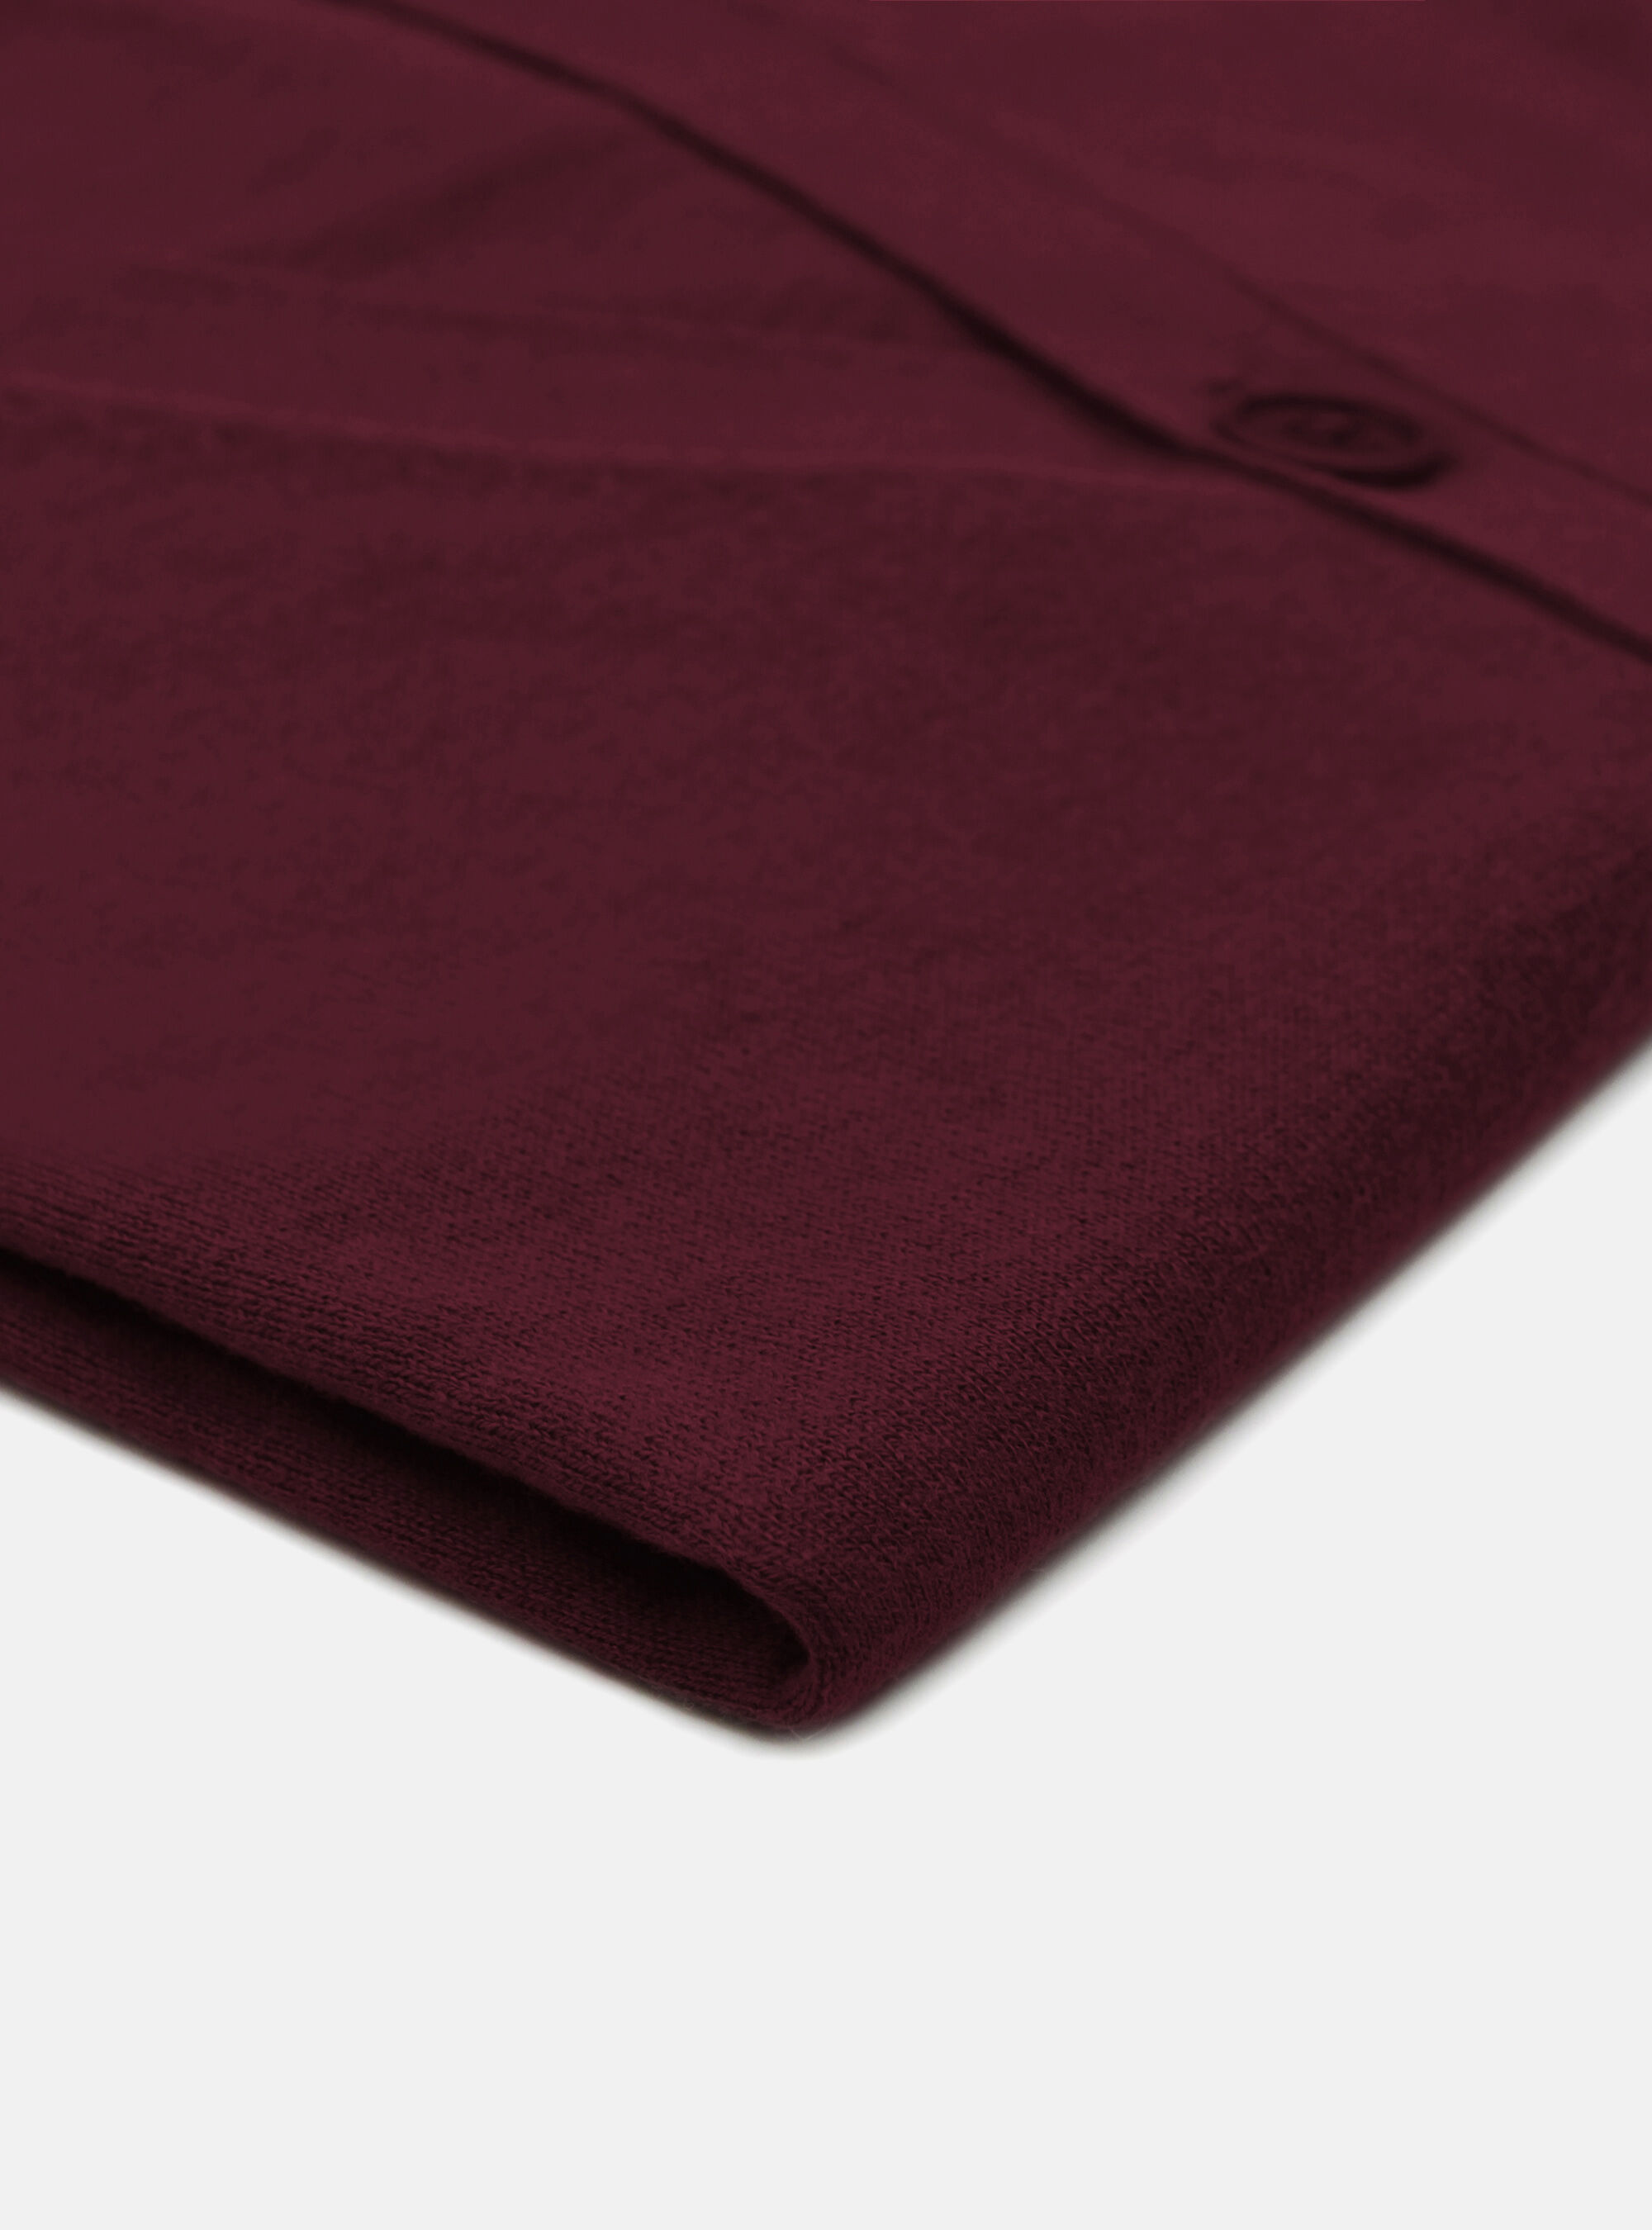 Viero Richi Cardigan Sweater 100% Cotton # 2360 